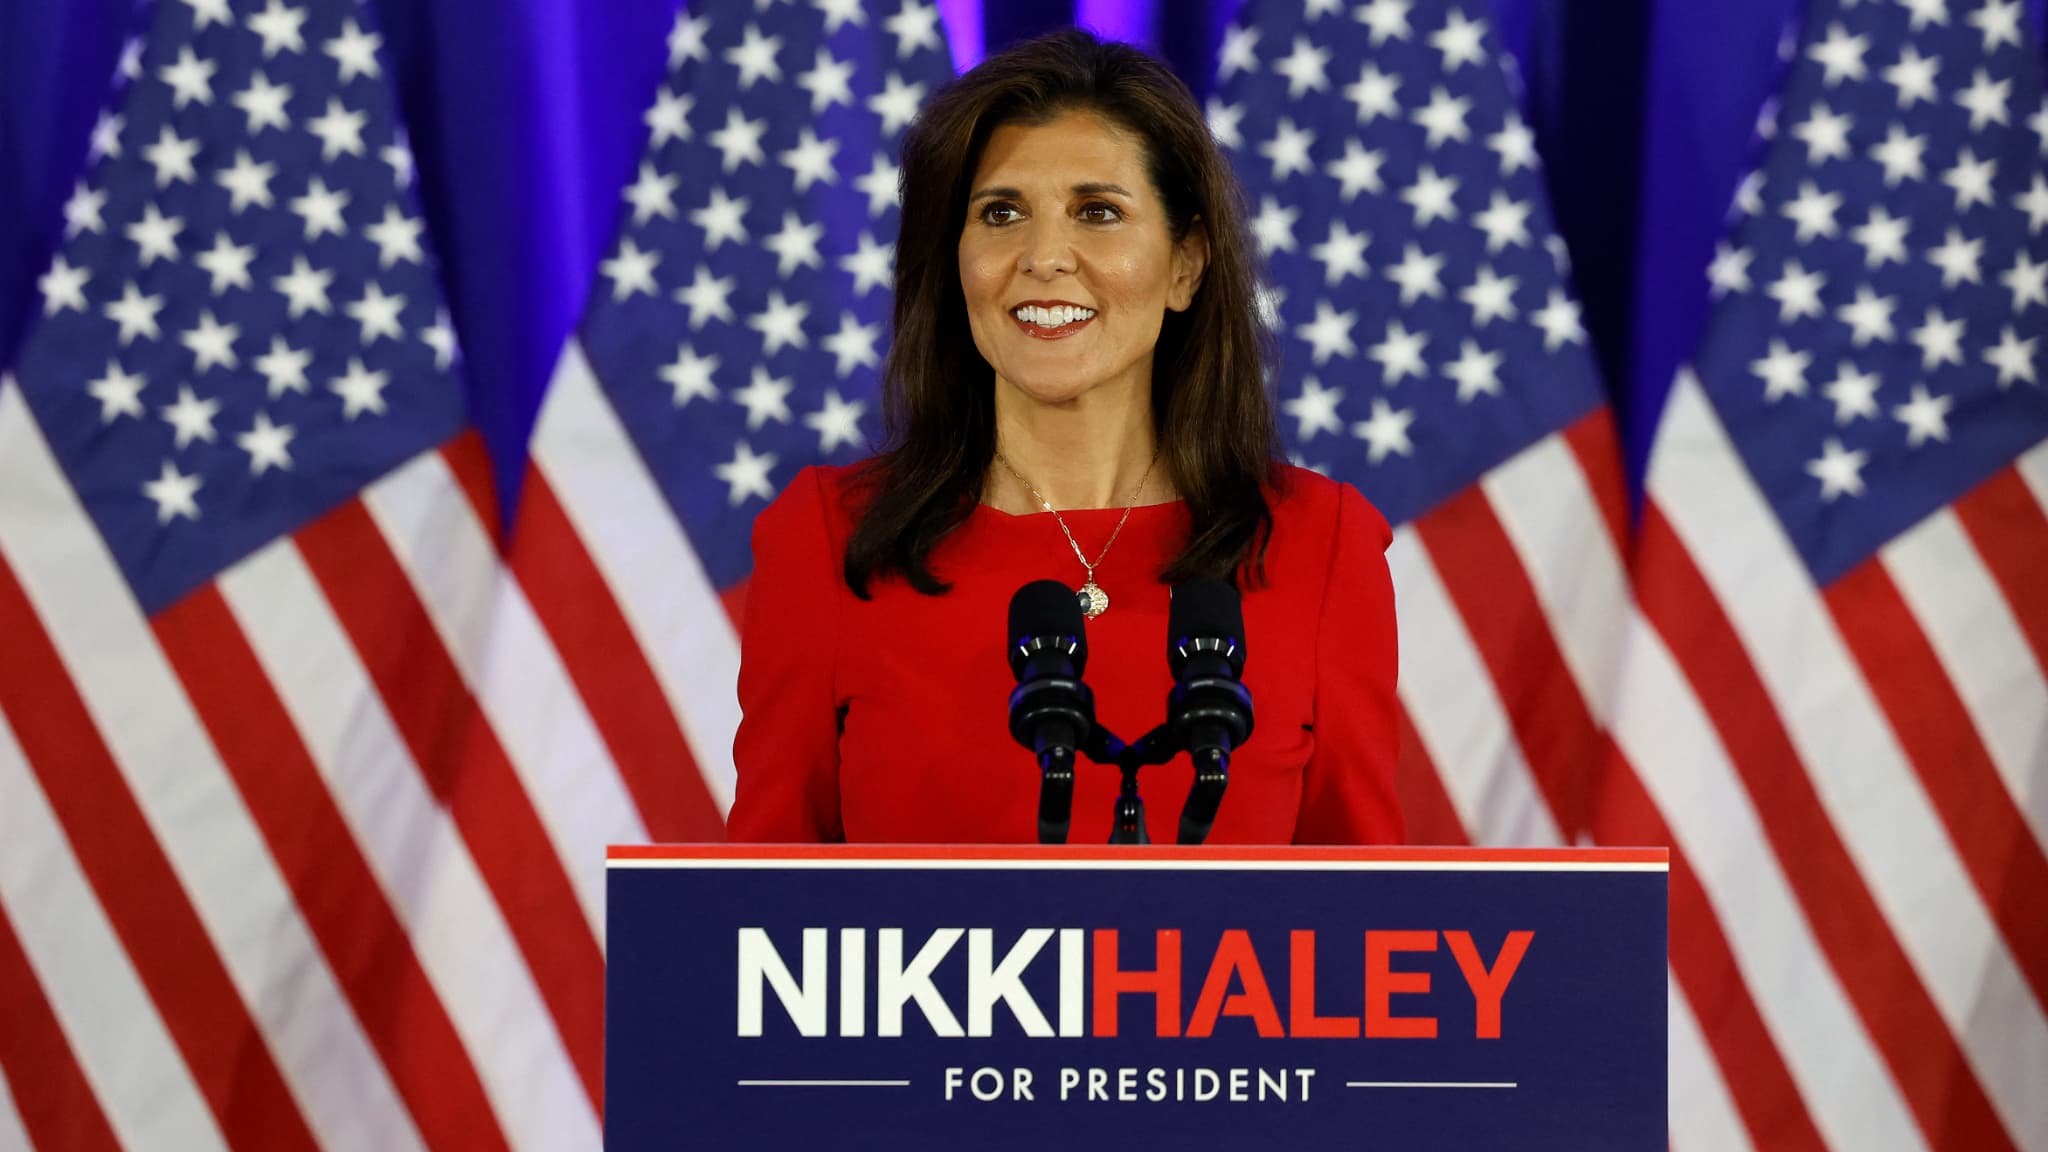 Nikki Haley ends her campaign Joe Biden praises her courage